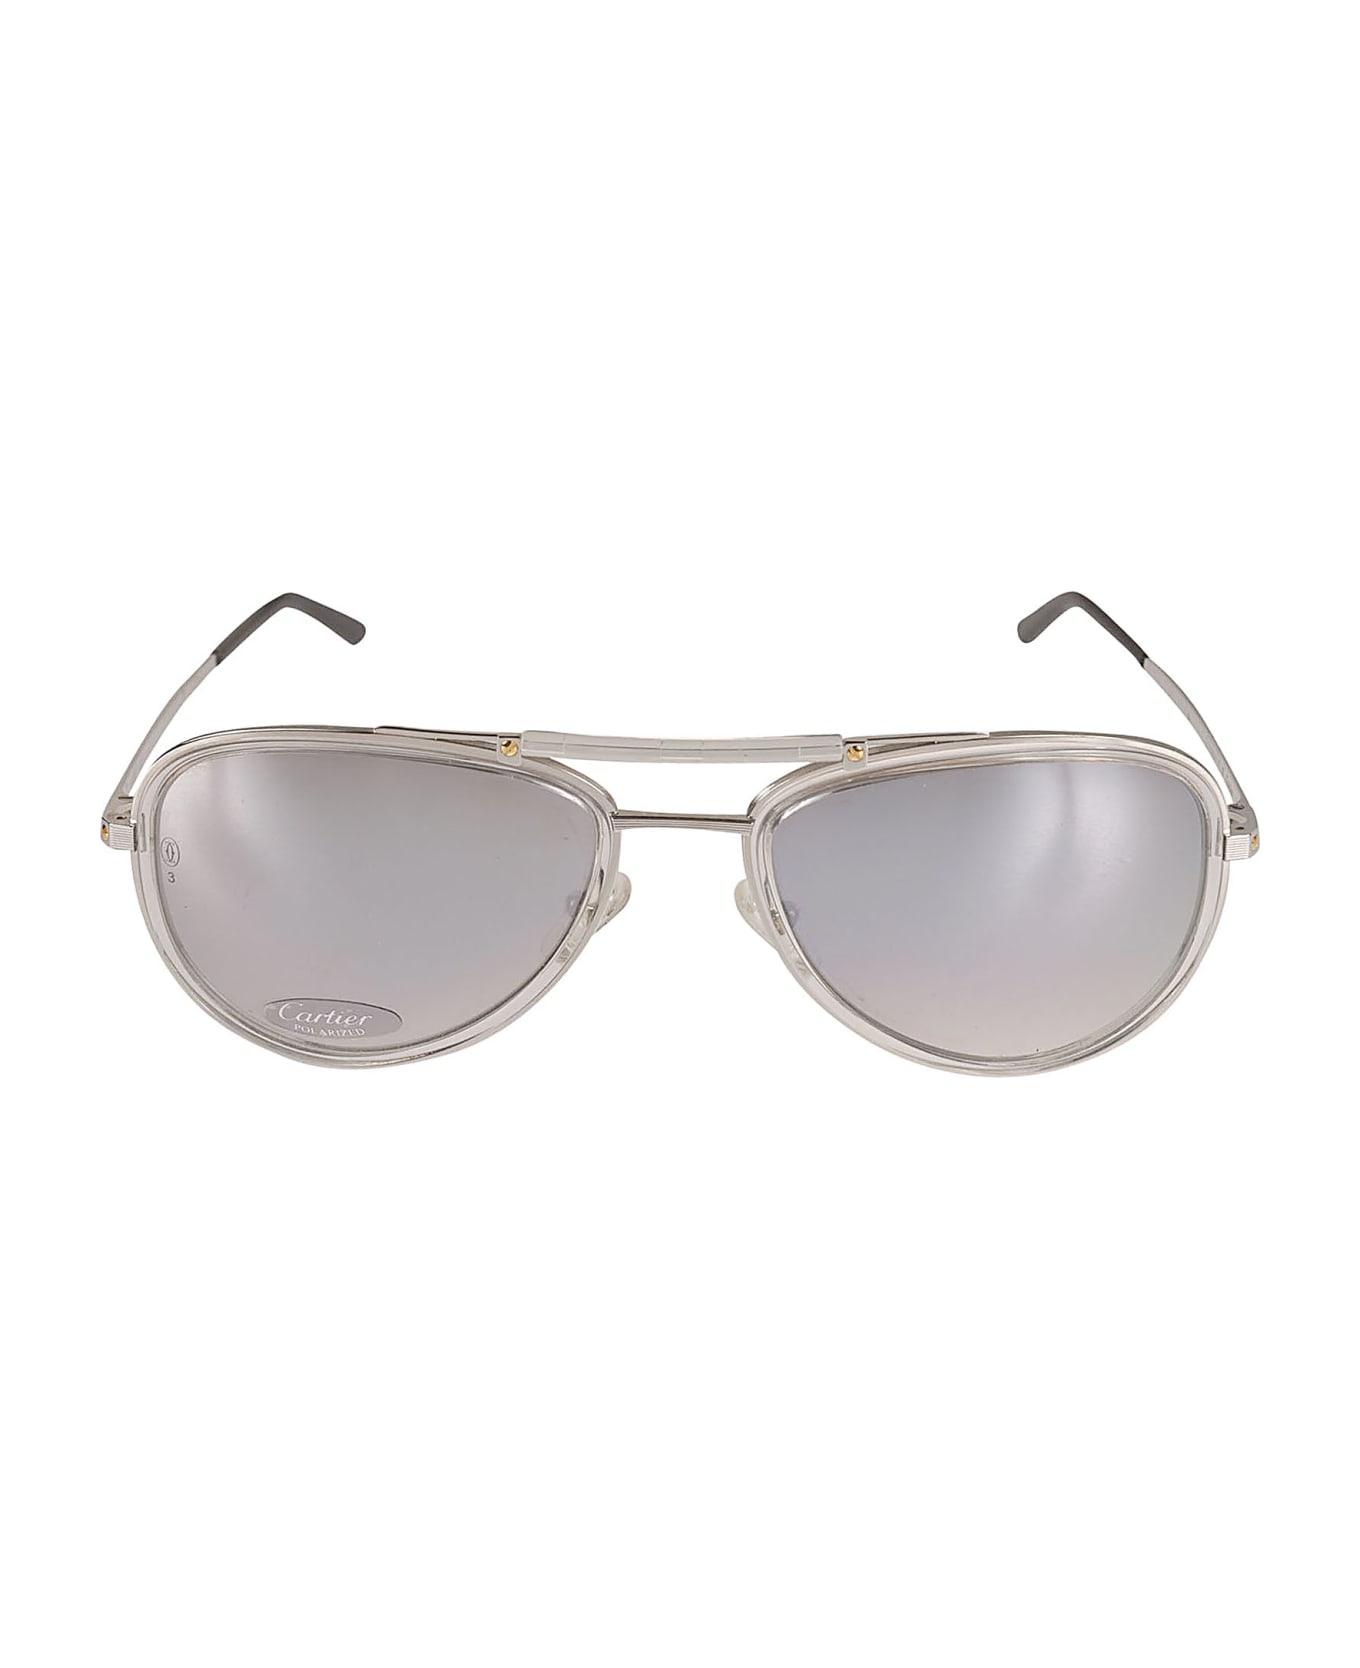 Cartier Eyewear Thick Aviator Sunglasses - platinum